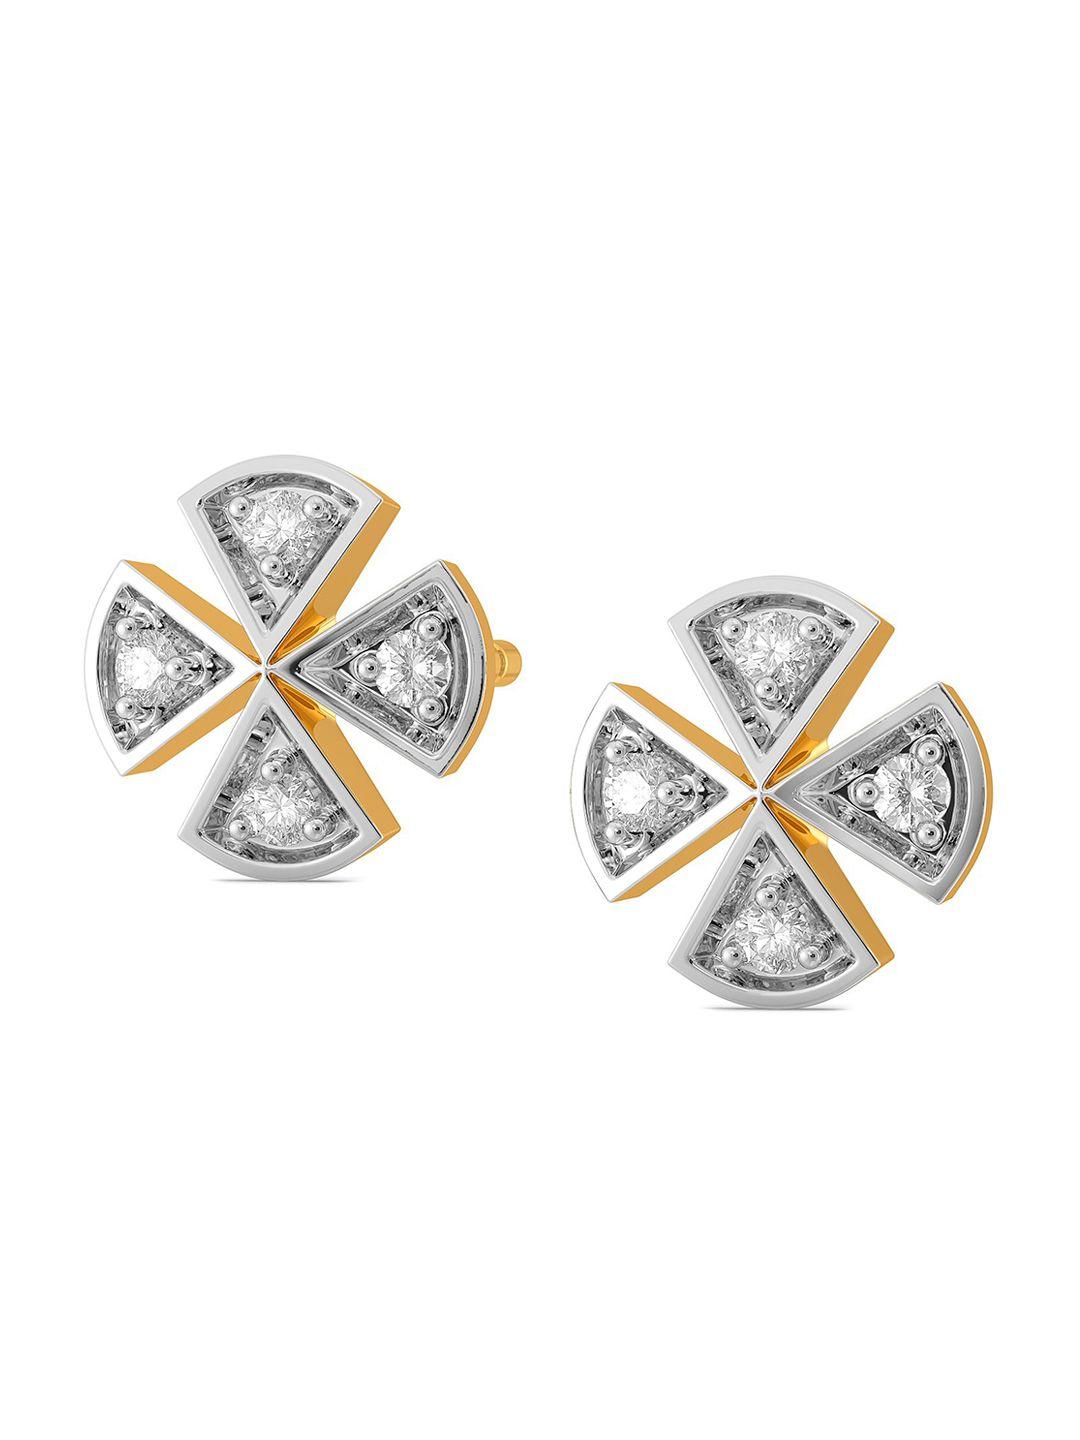 melorra check remix diamond-studded rhodium-plated 18kt gold studs earrings- 1.51gm